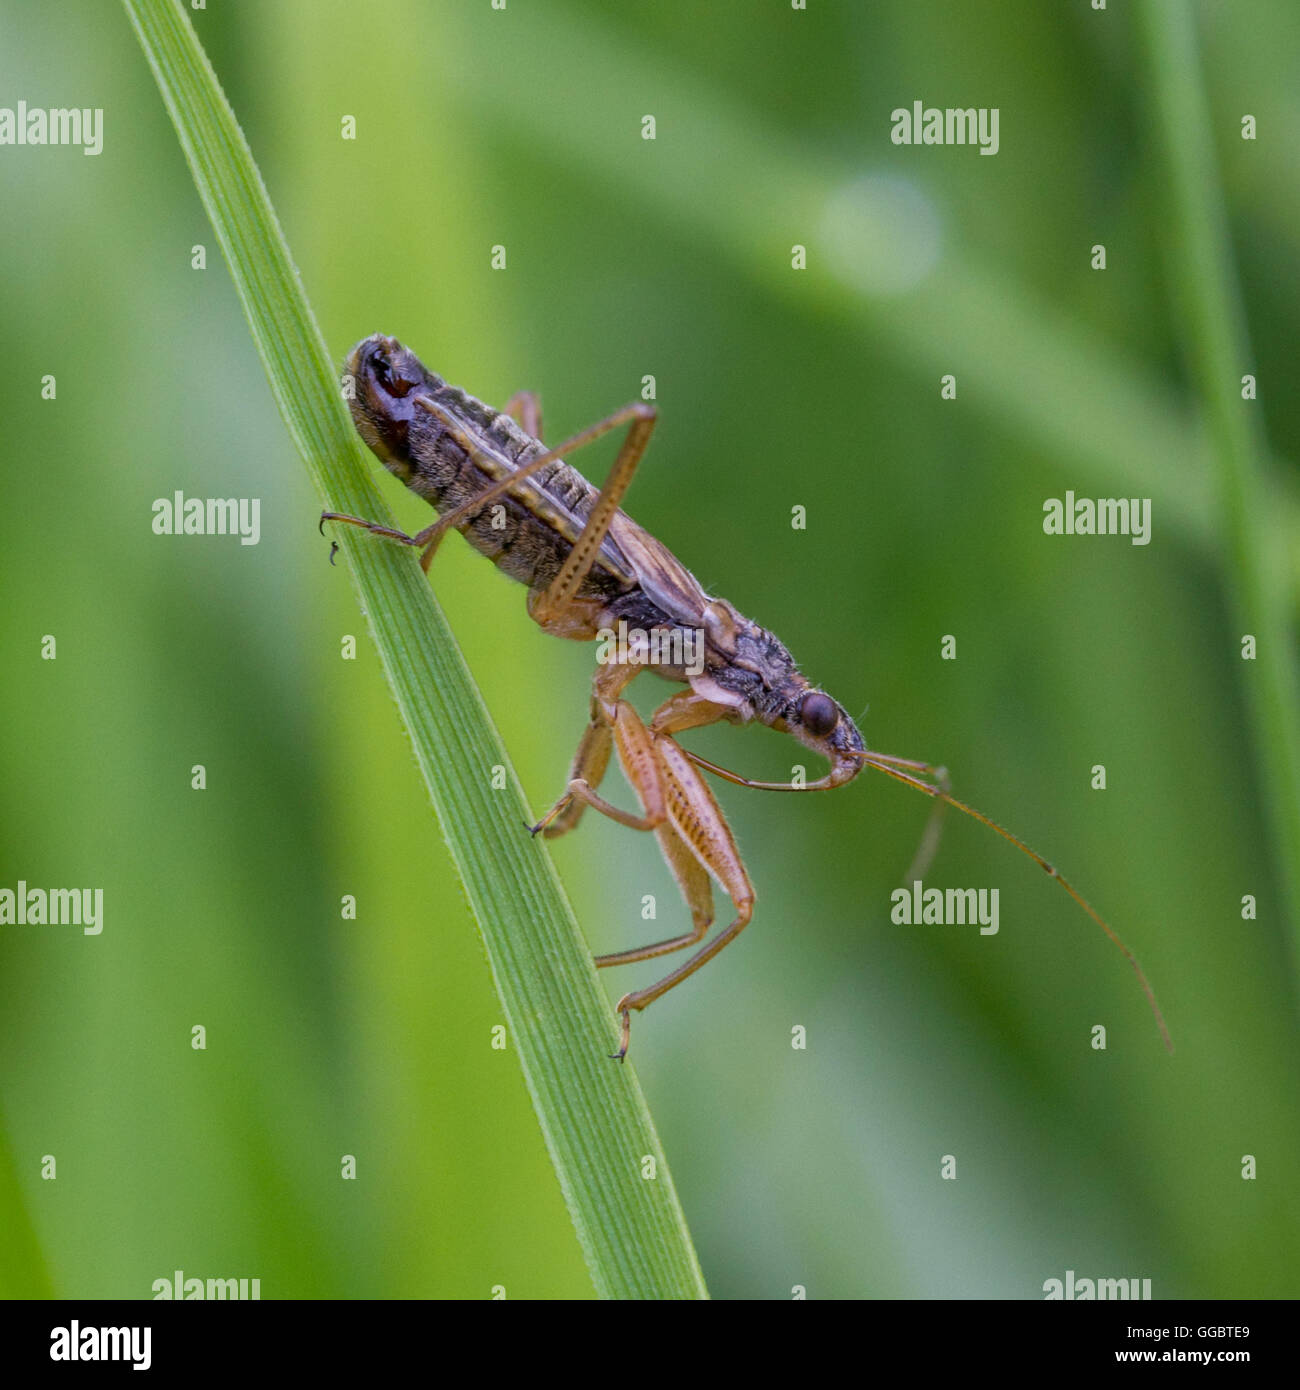 Broad Damselbug (Nabis flavomarginatus) on a stalk of grass, Yorkshire, UK Stock Photo